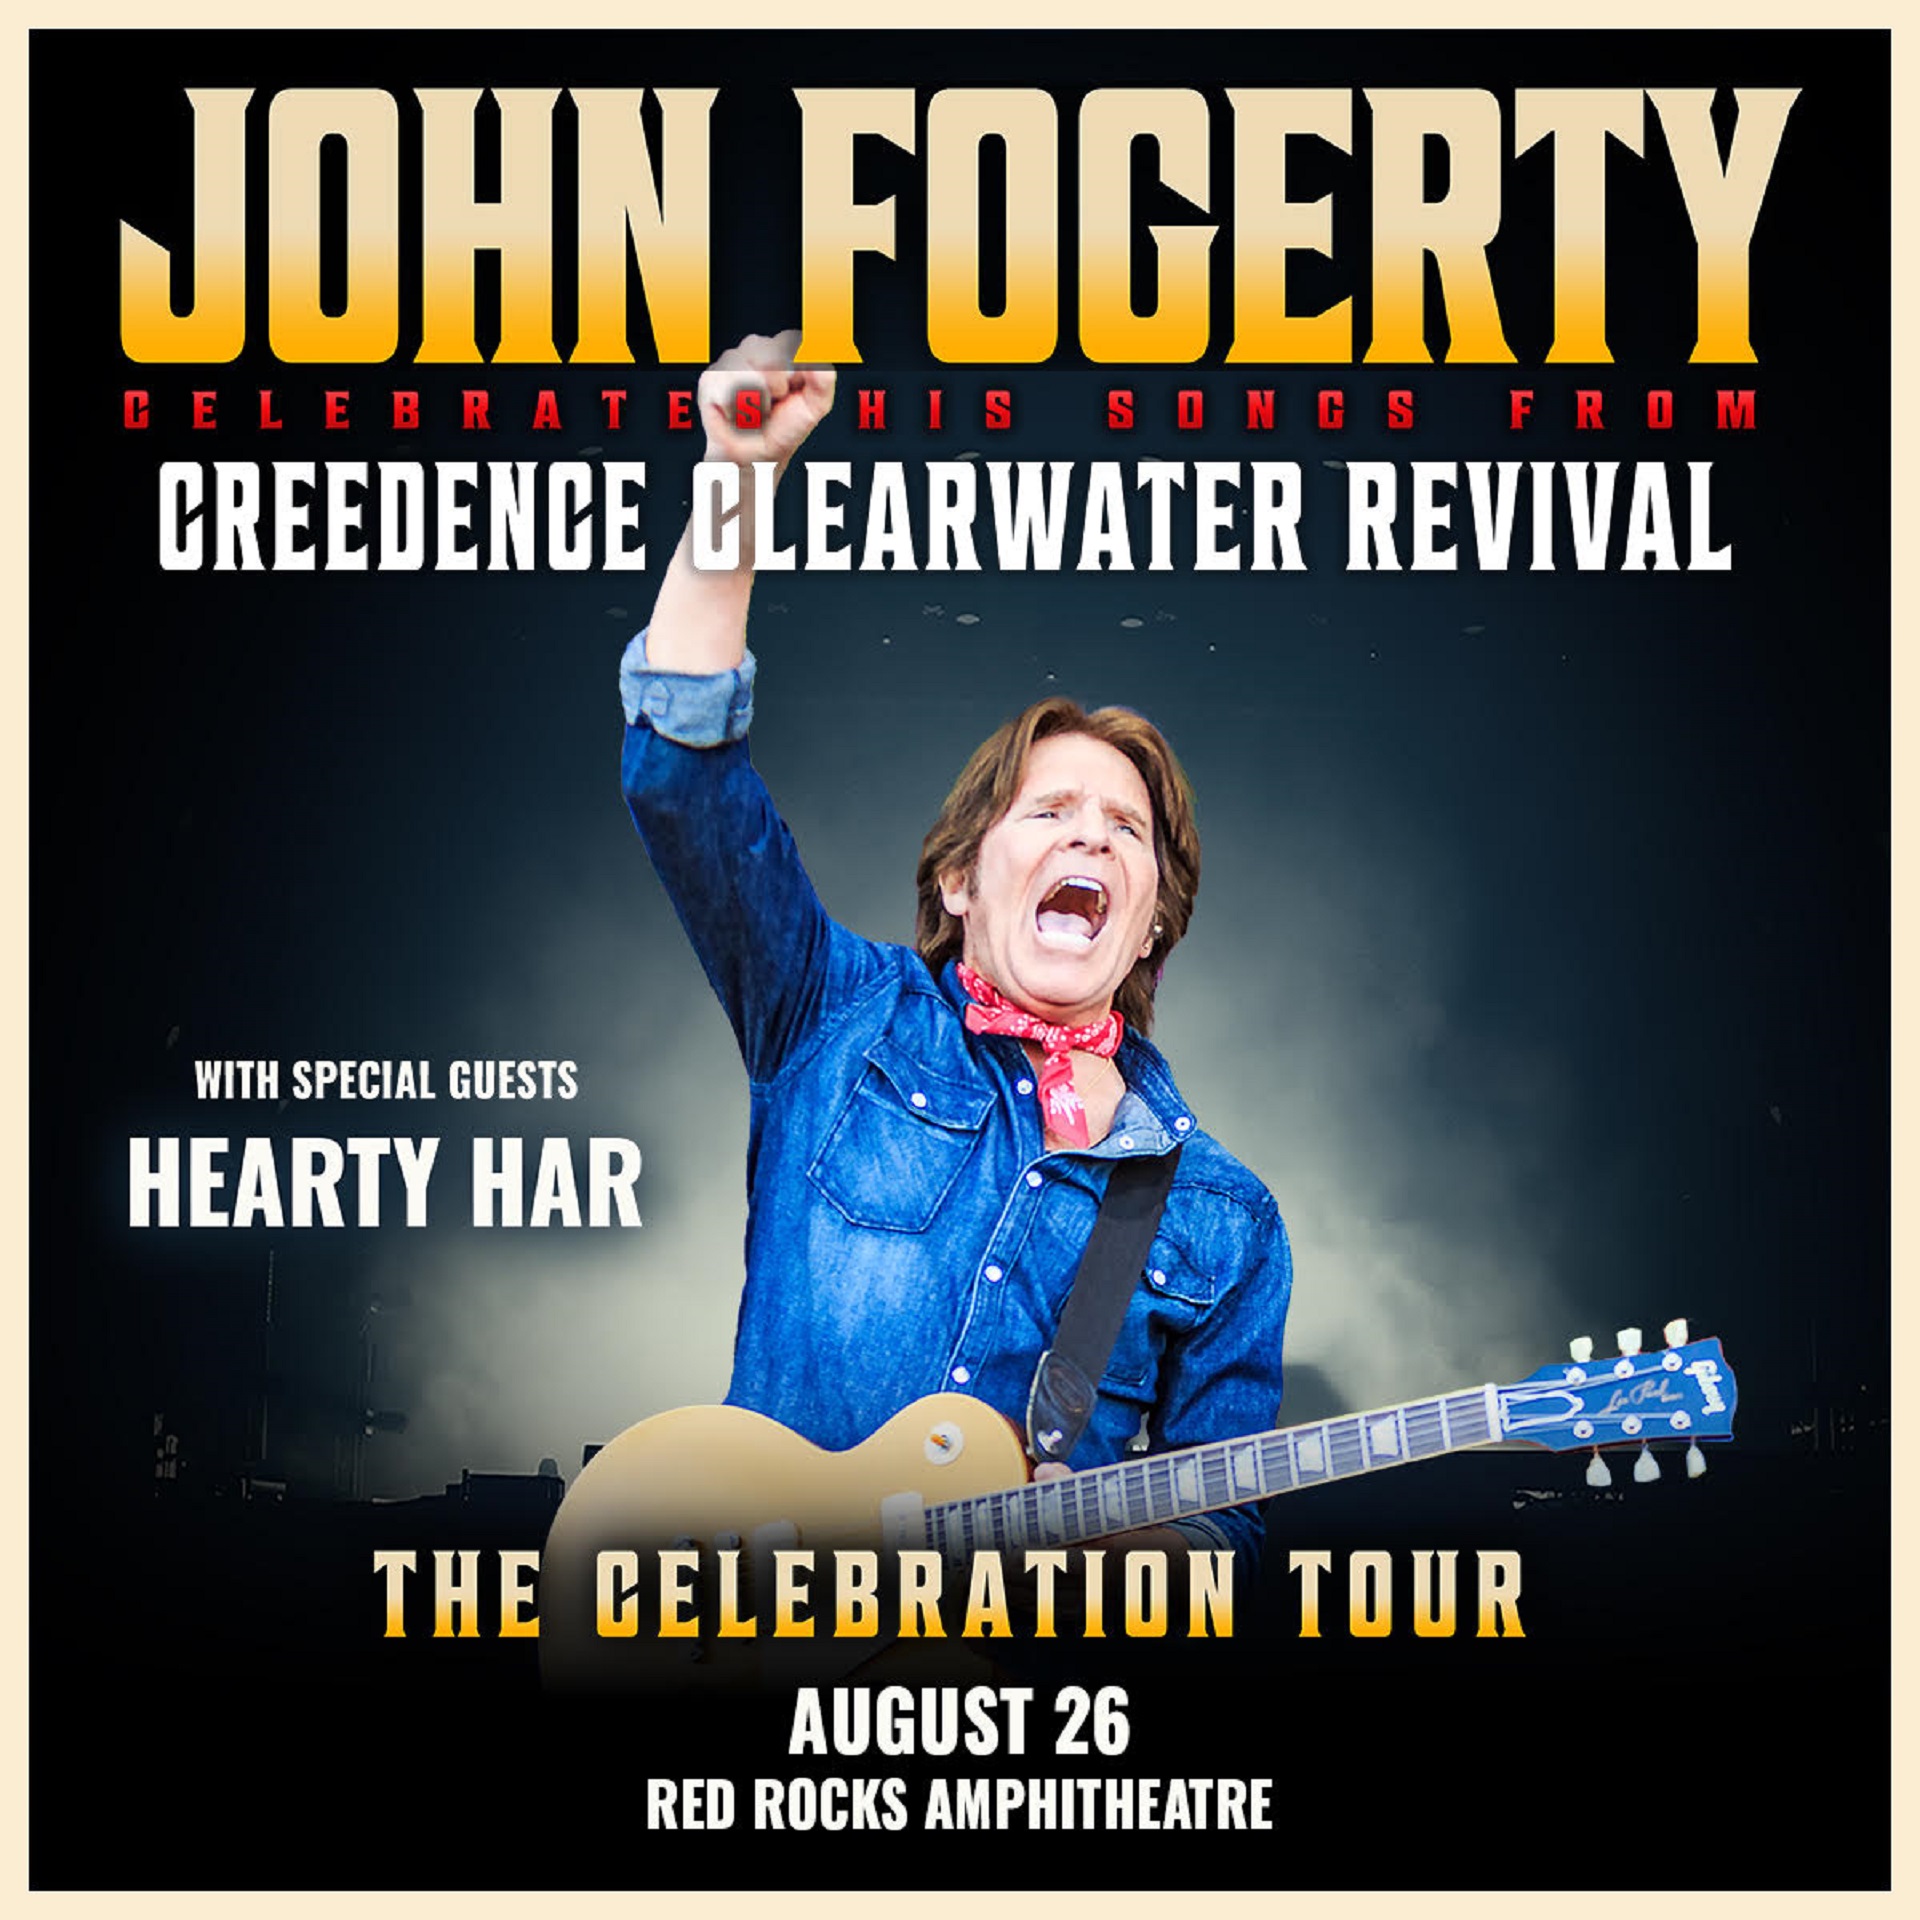 john fogerty celebration tour playlist